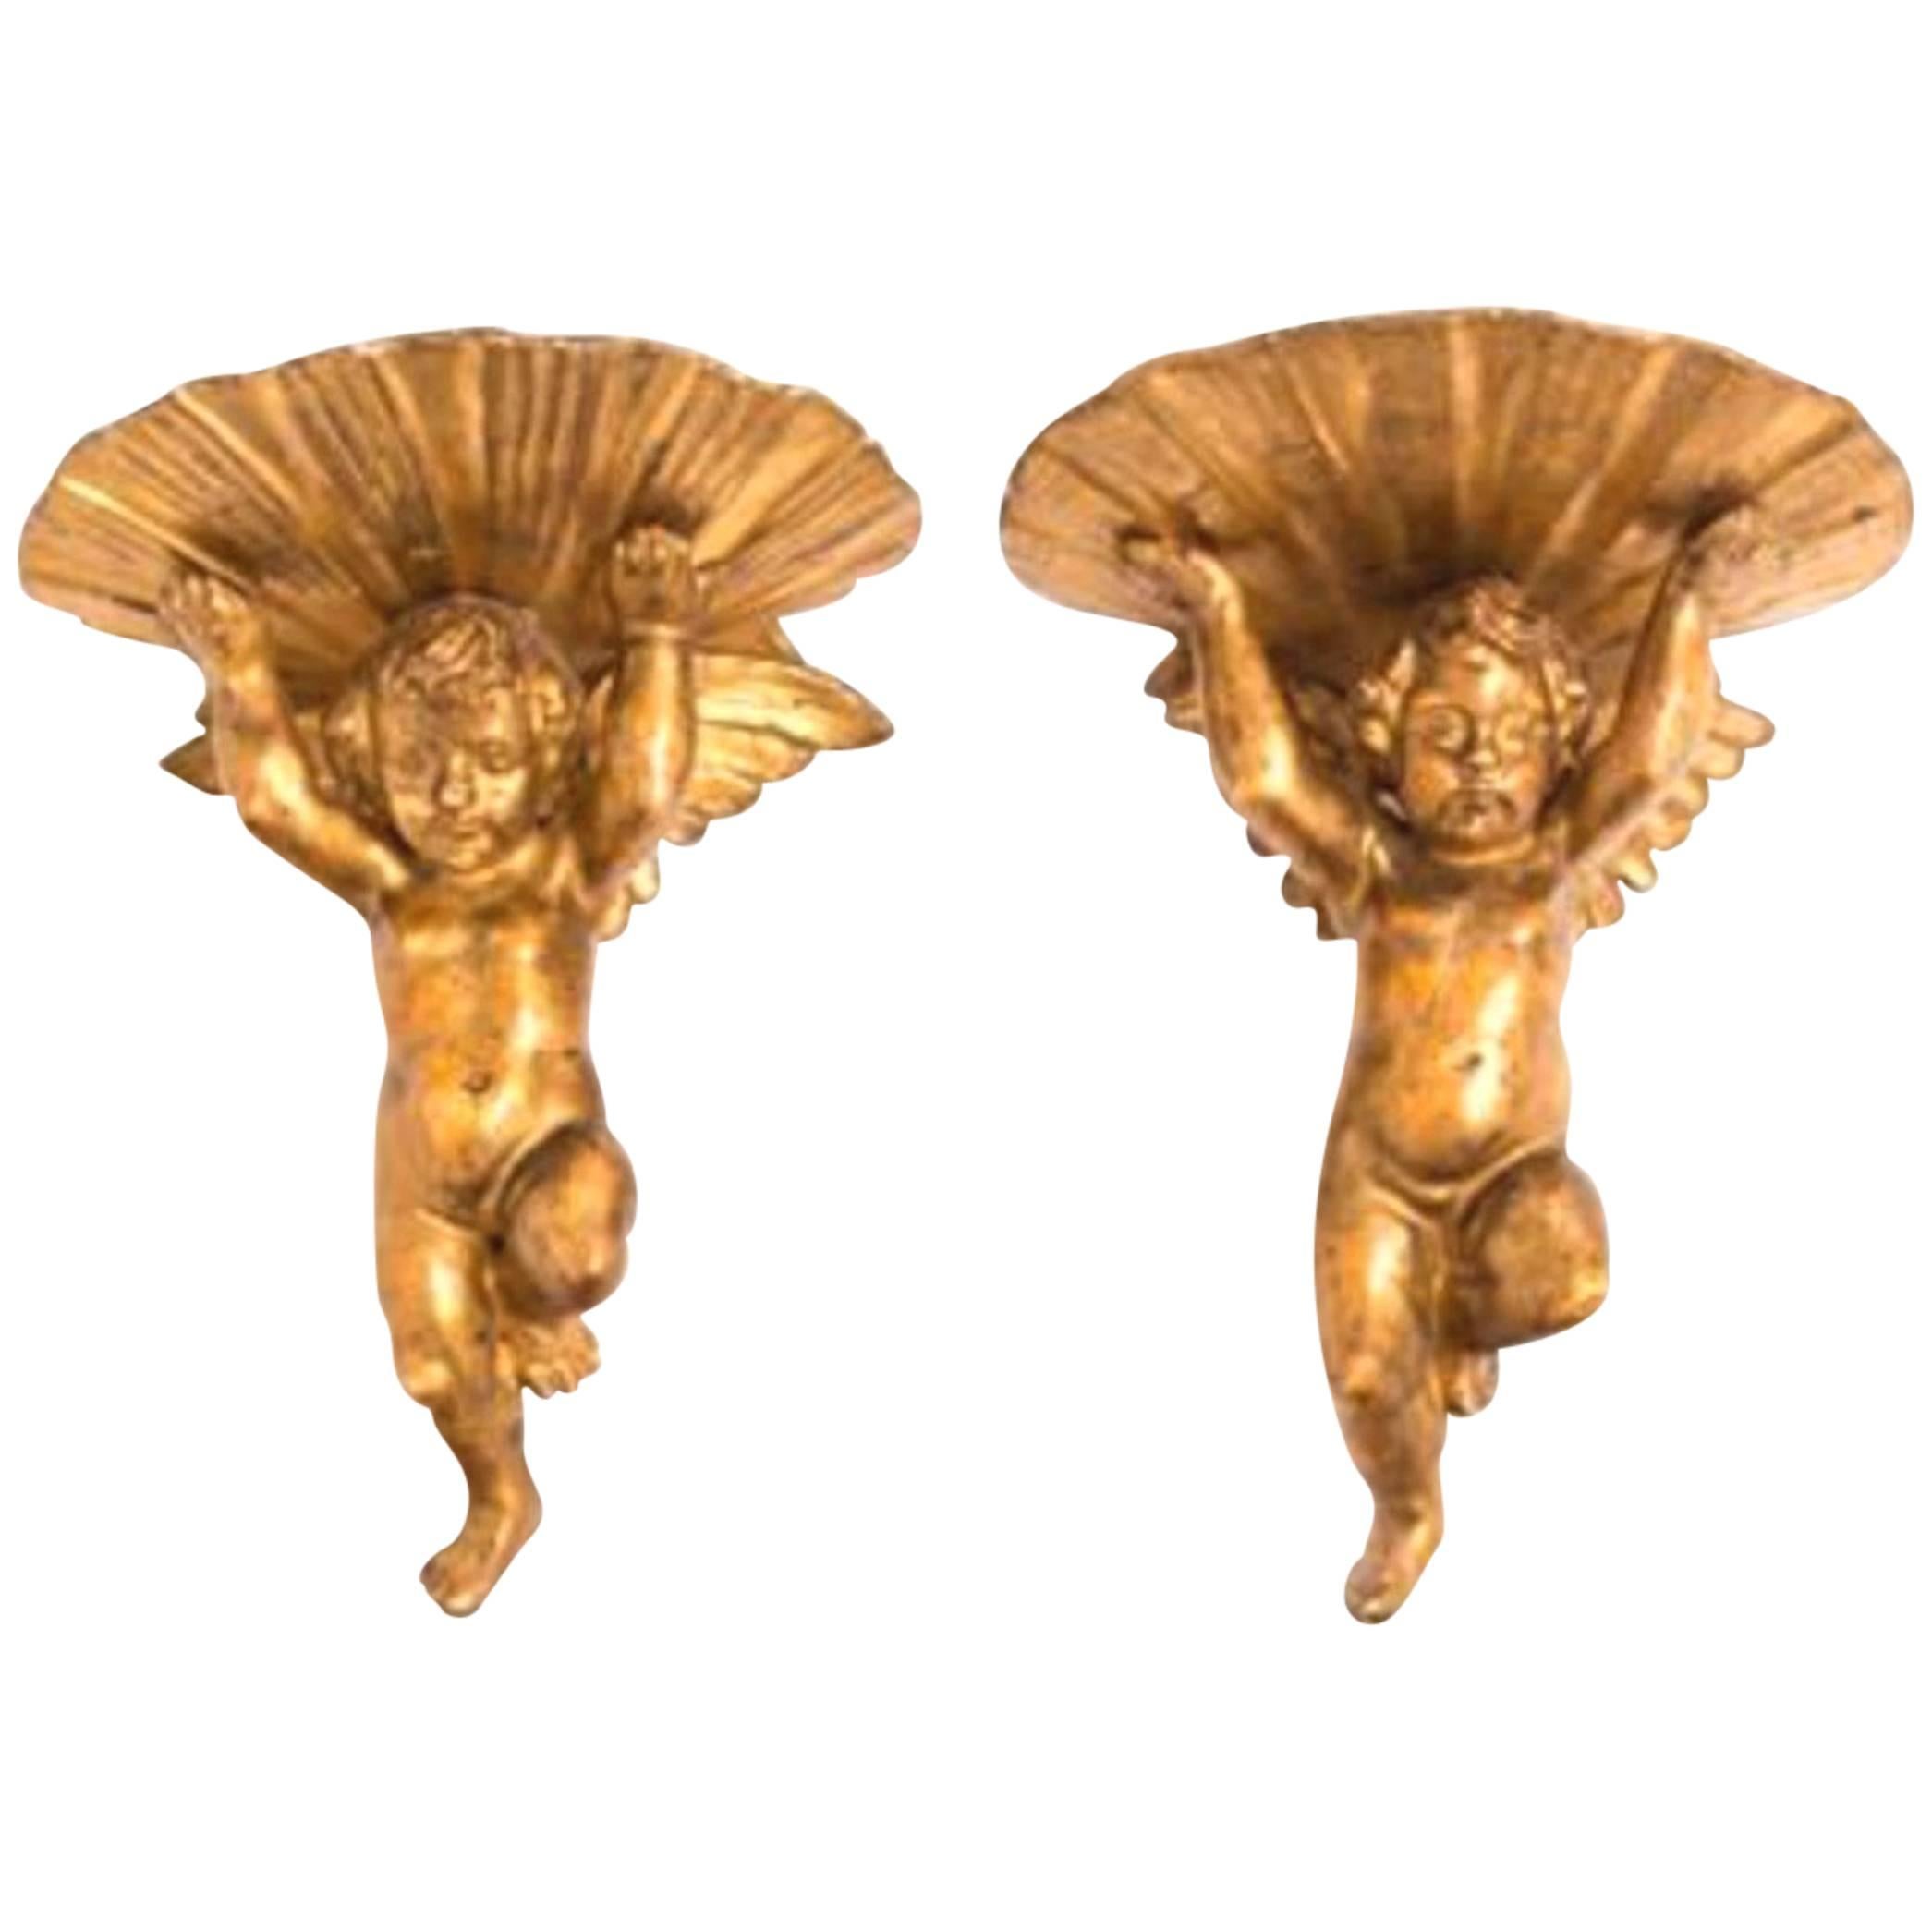 Encantadora pareja de ménsulas italianas de madera dorada del siglo XIX, concha de soporte de putti